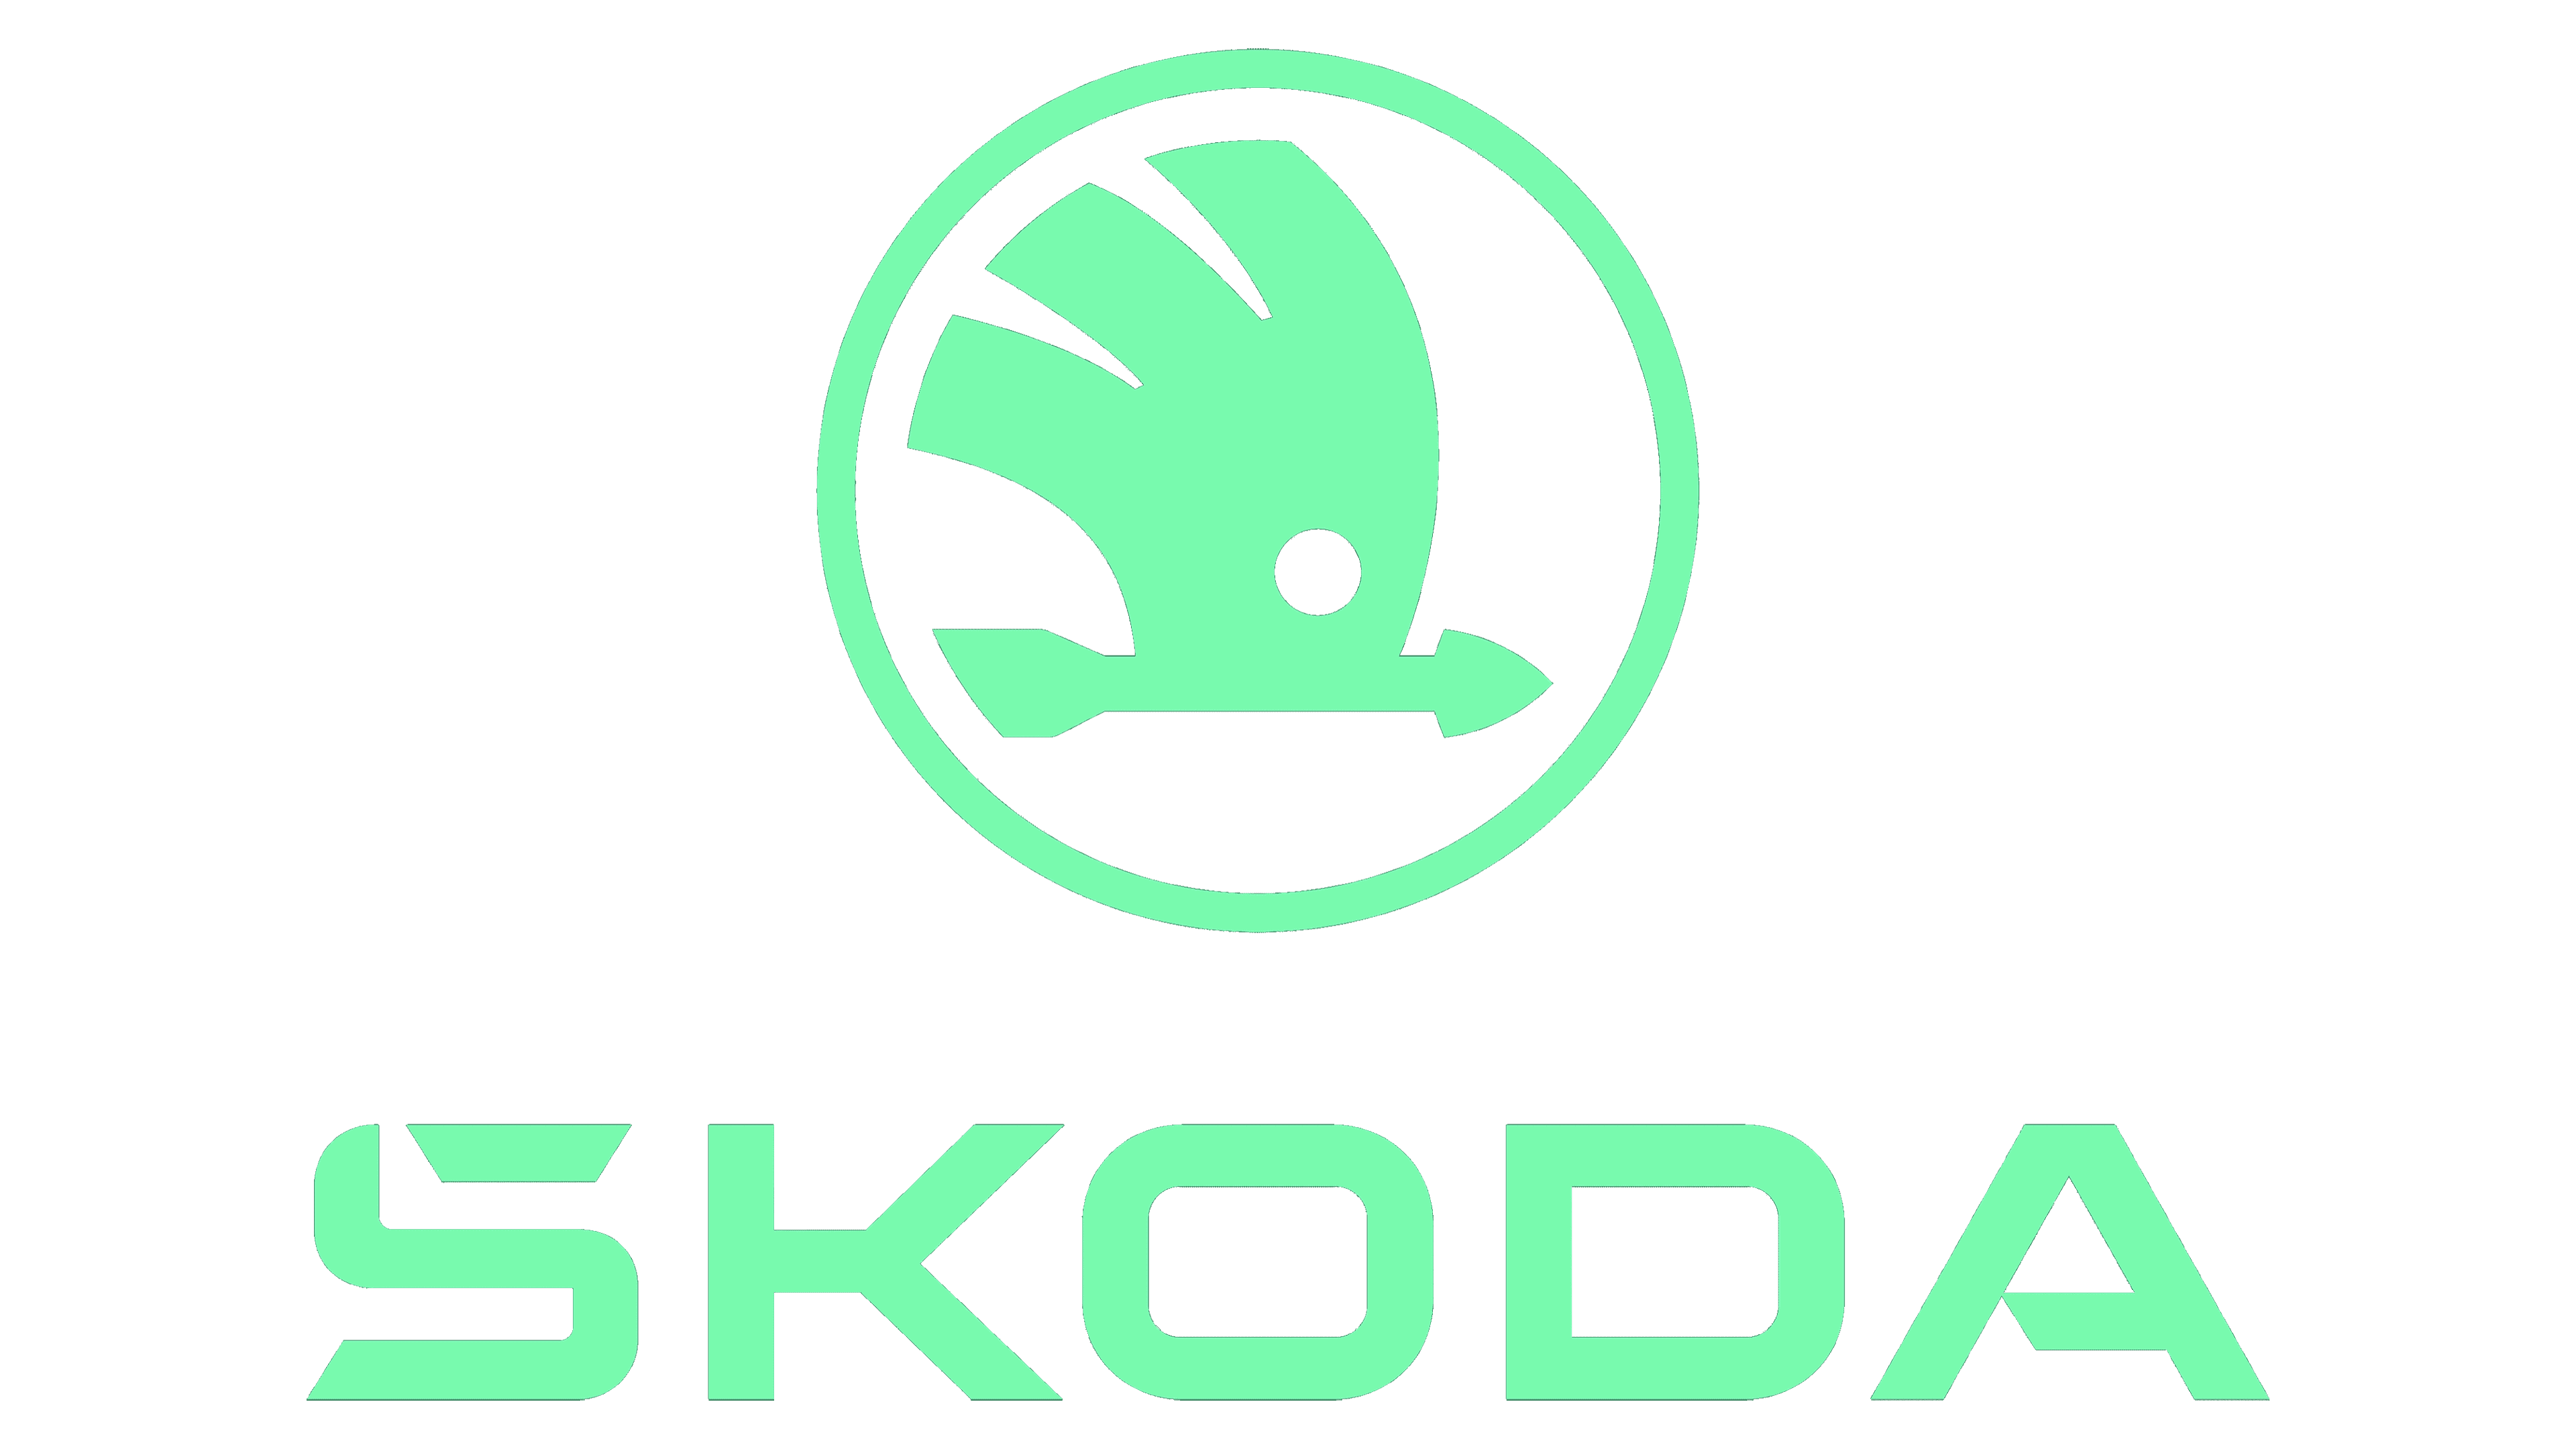 Le logo voiture Škoda, embleme sigle lancia